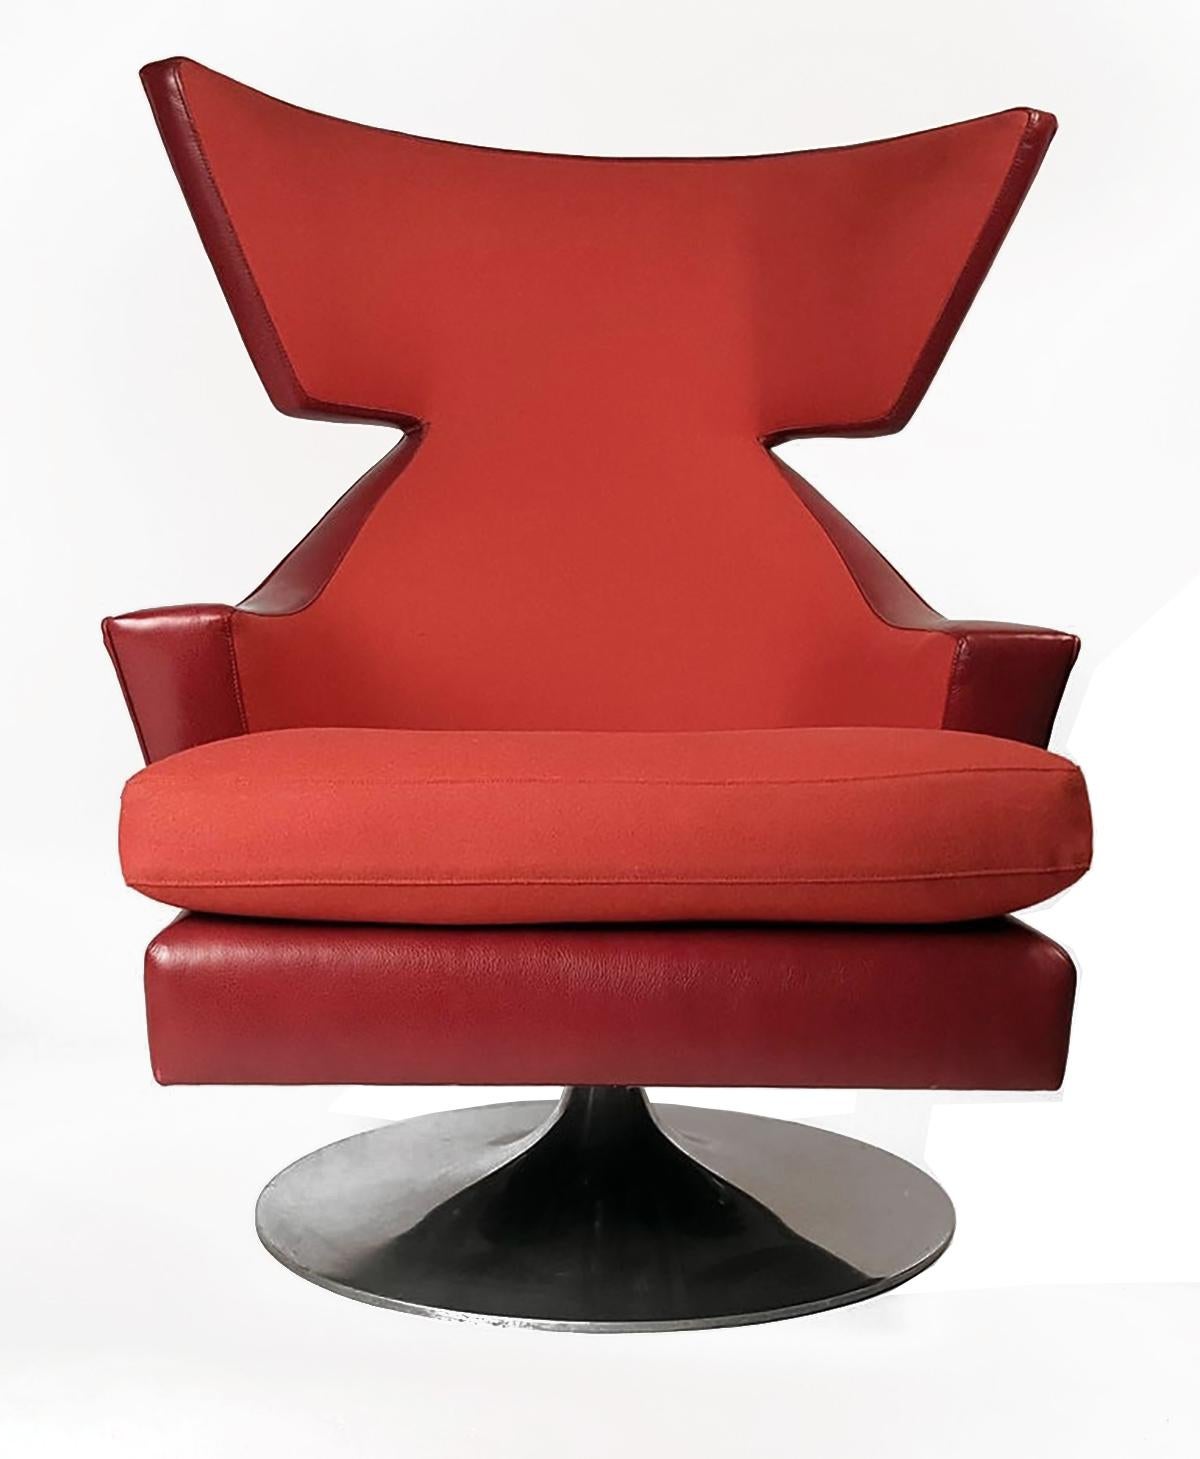 Modern Knoll Leather Wing Back Swivel Lounge Chair Designed by Joe D'urso